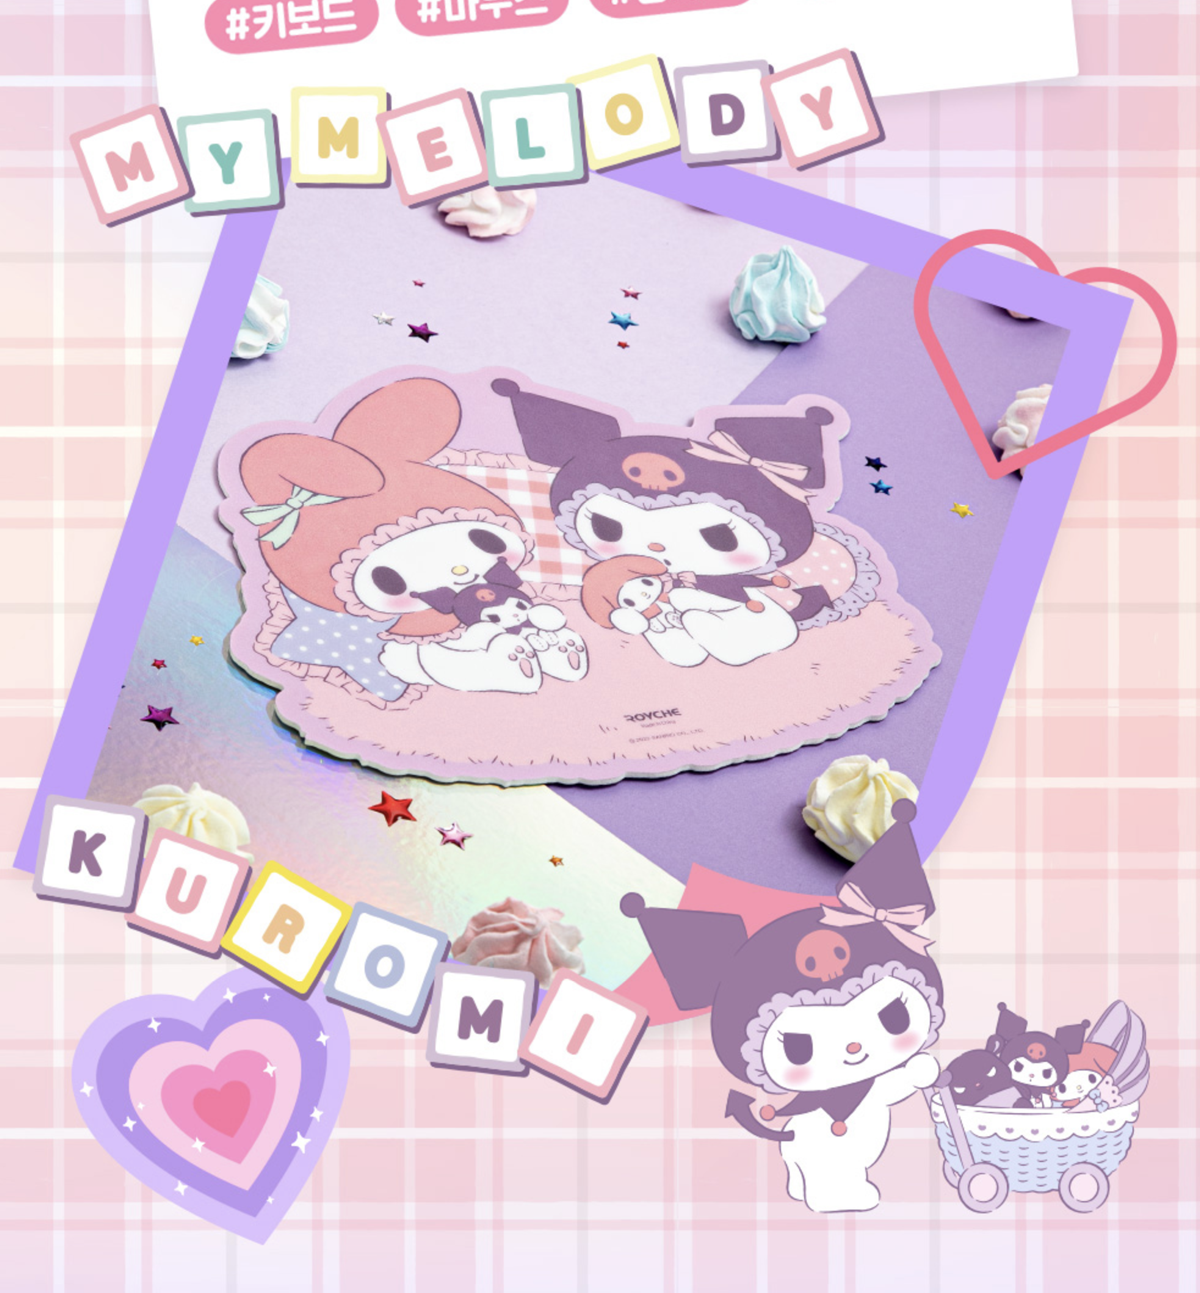 Royche Sanrio My Melody & Kuromi Mouse Pad